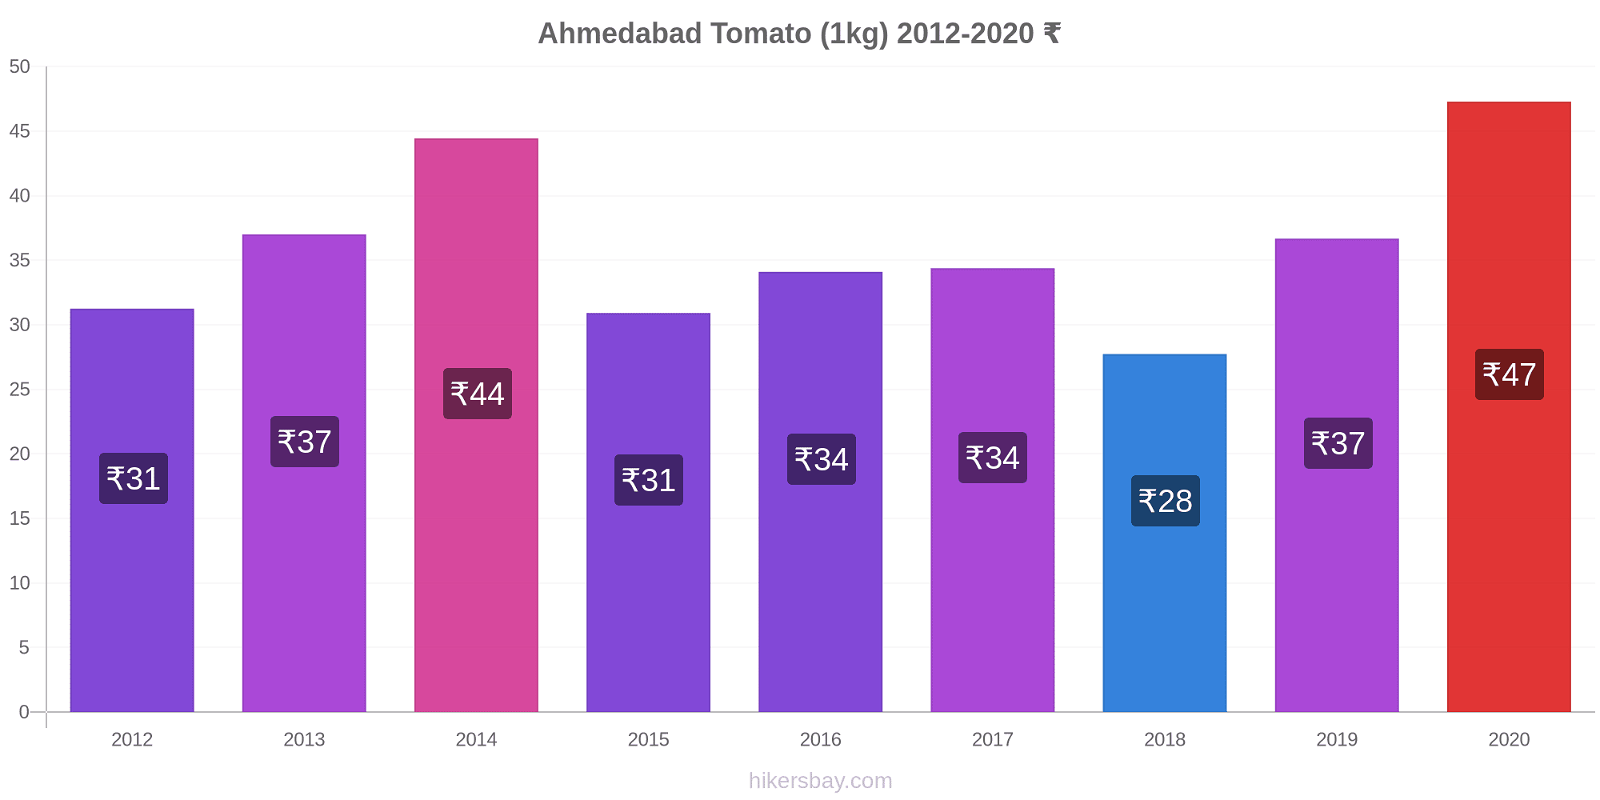 Ahmedabad price changes Tomato (1kg) hikersbay.com